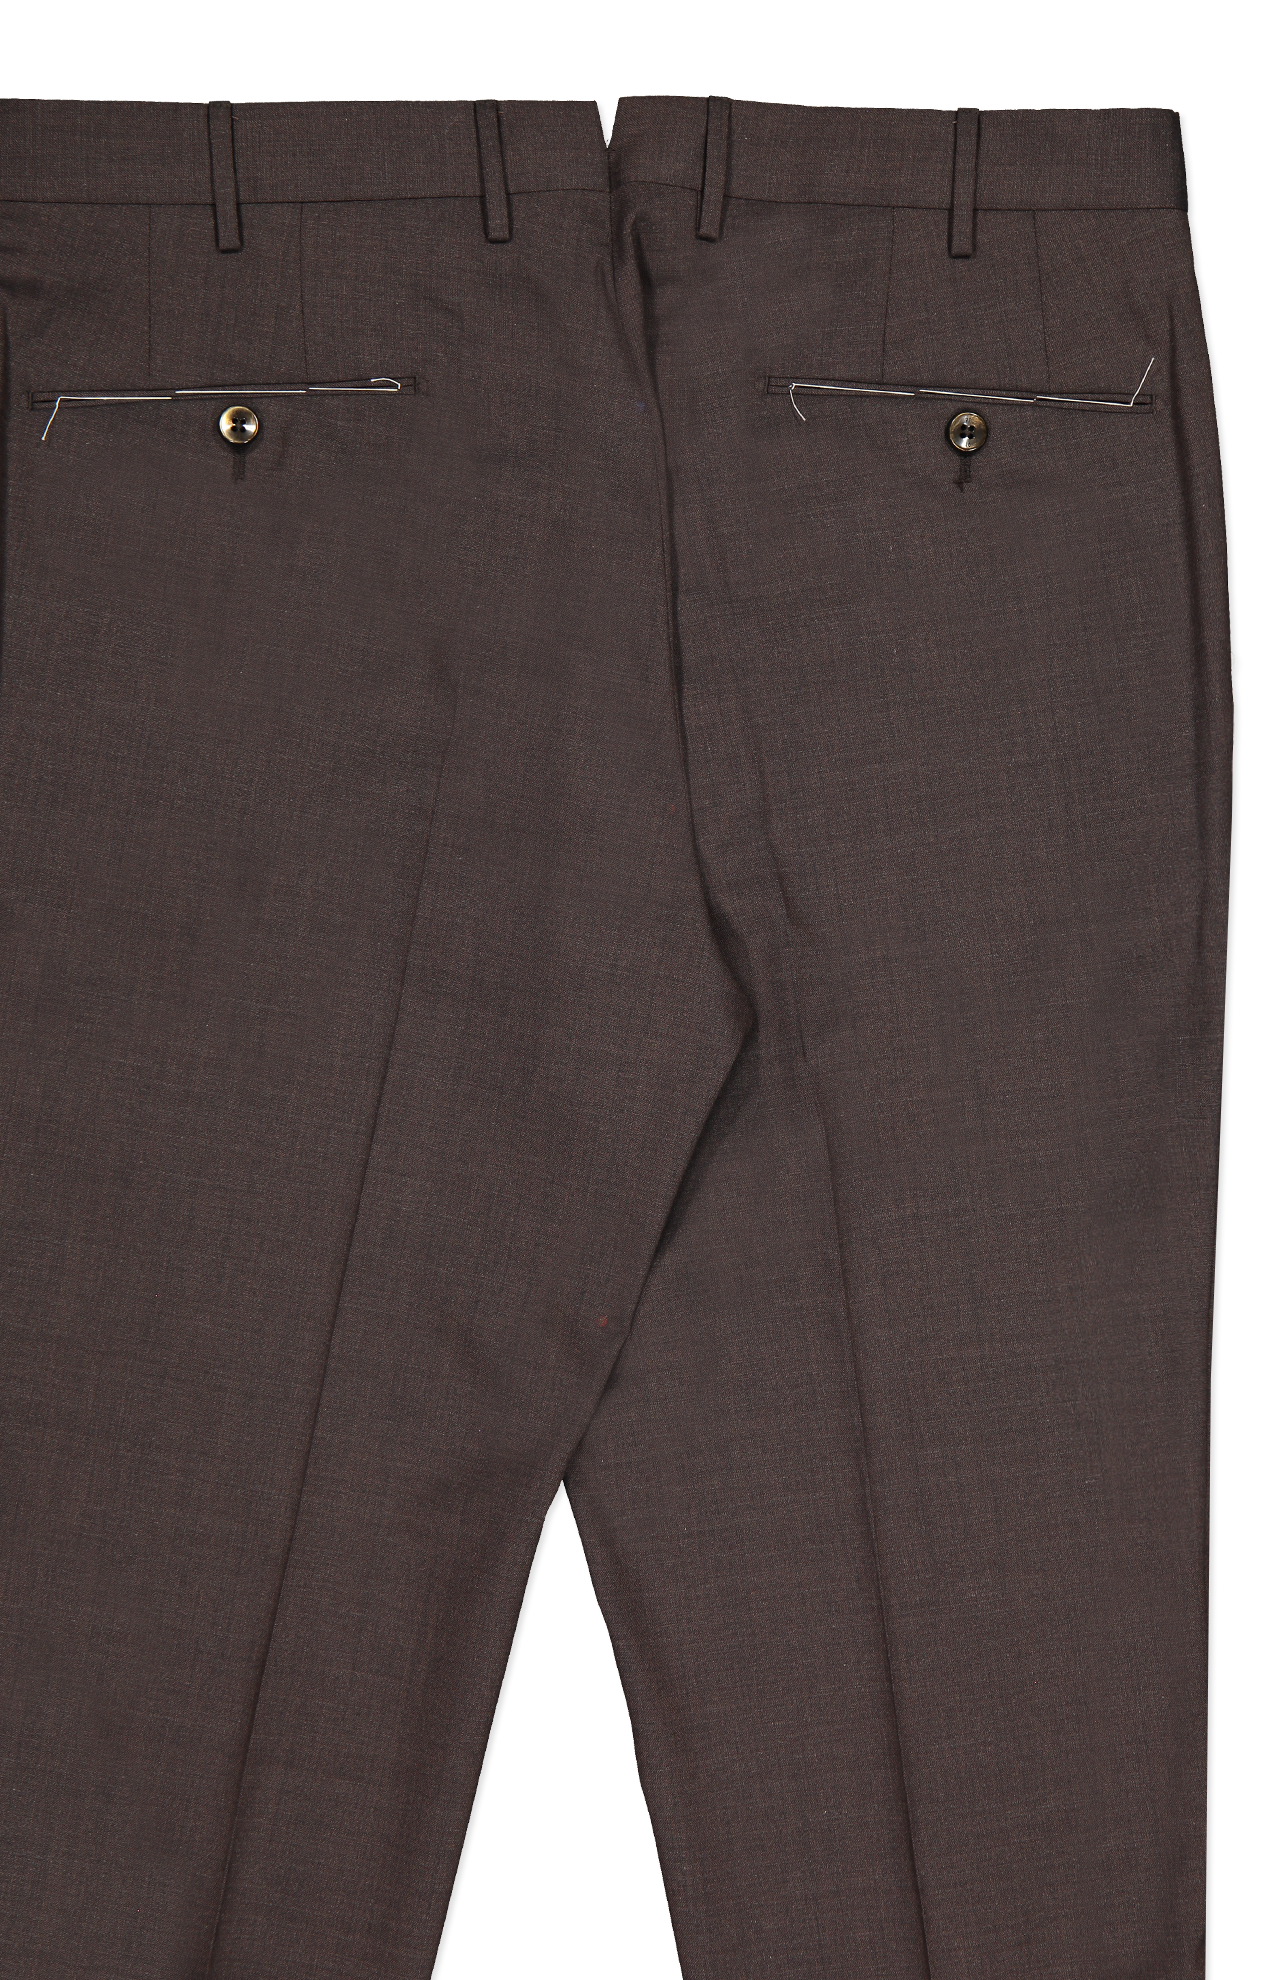 PT Torino Wool Plain Weave Trouser in Brown Melange Back Detail Image (7062204448883)